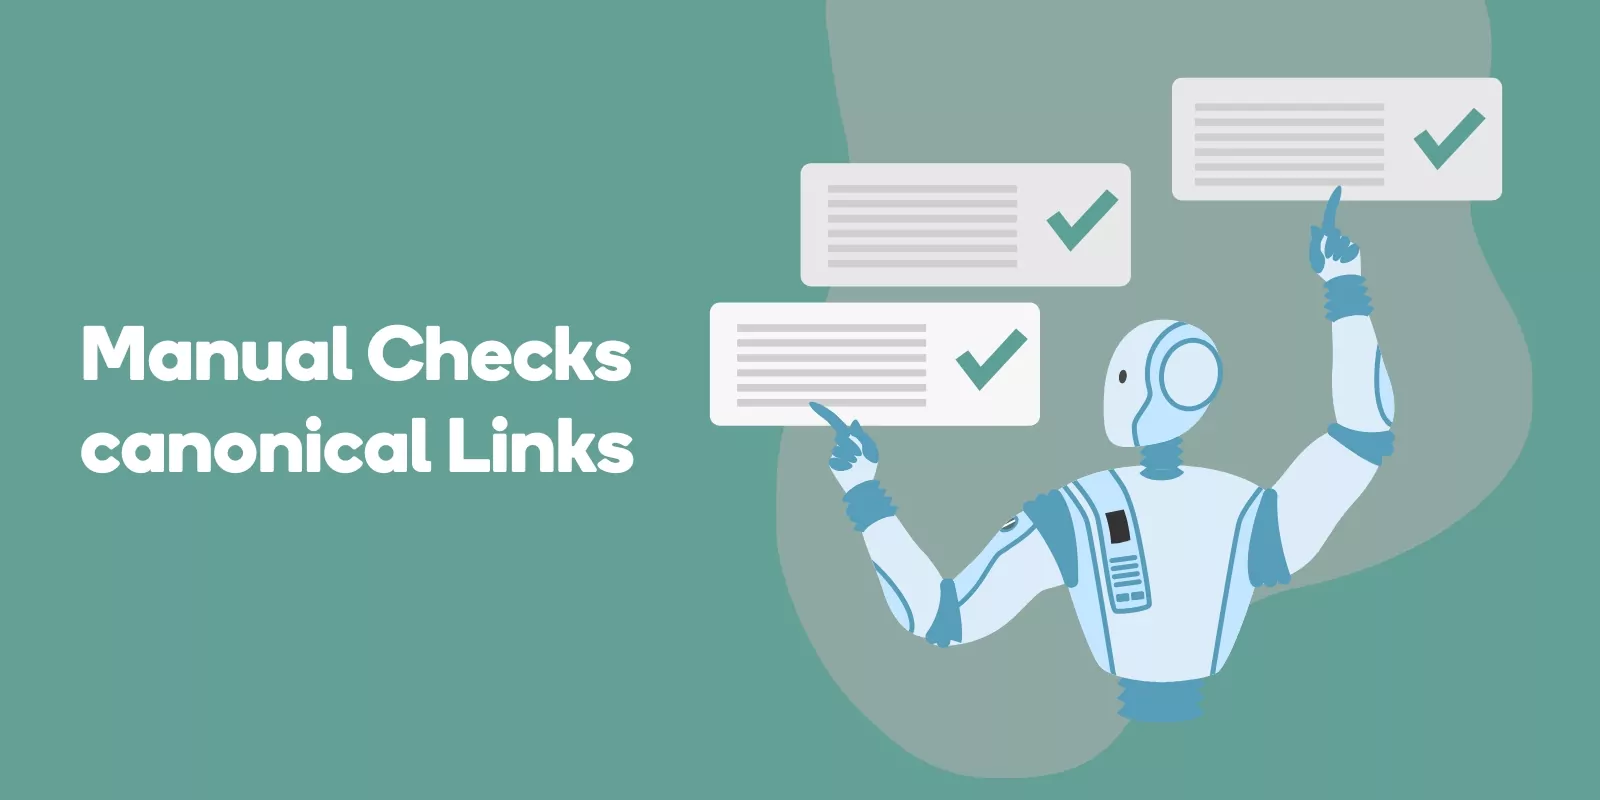 Manual Checks canonical Links